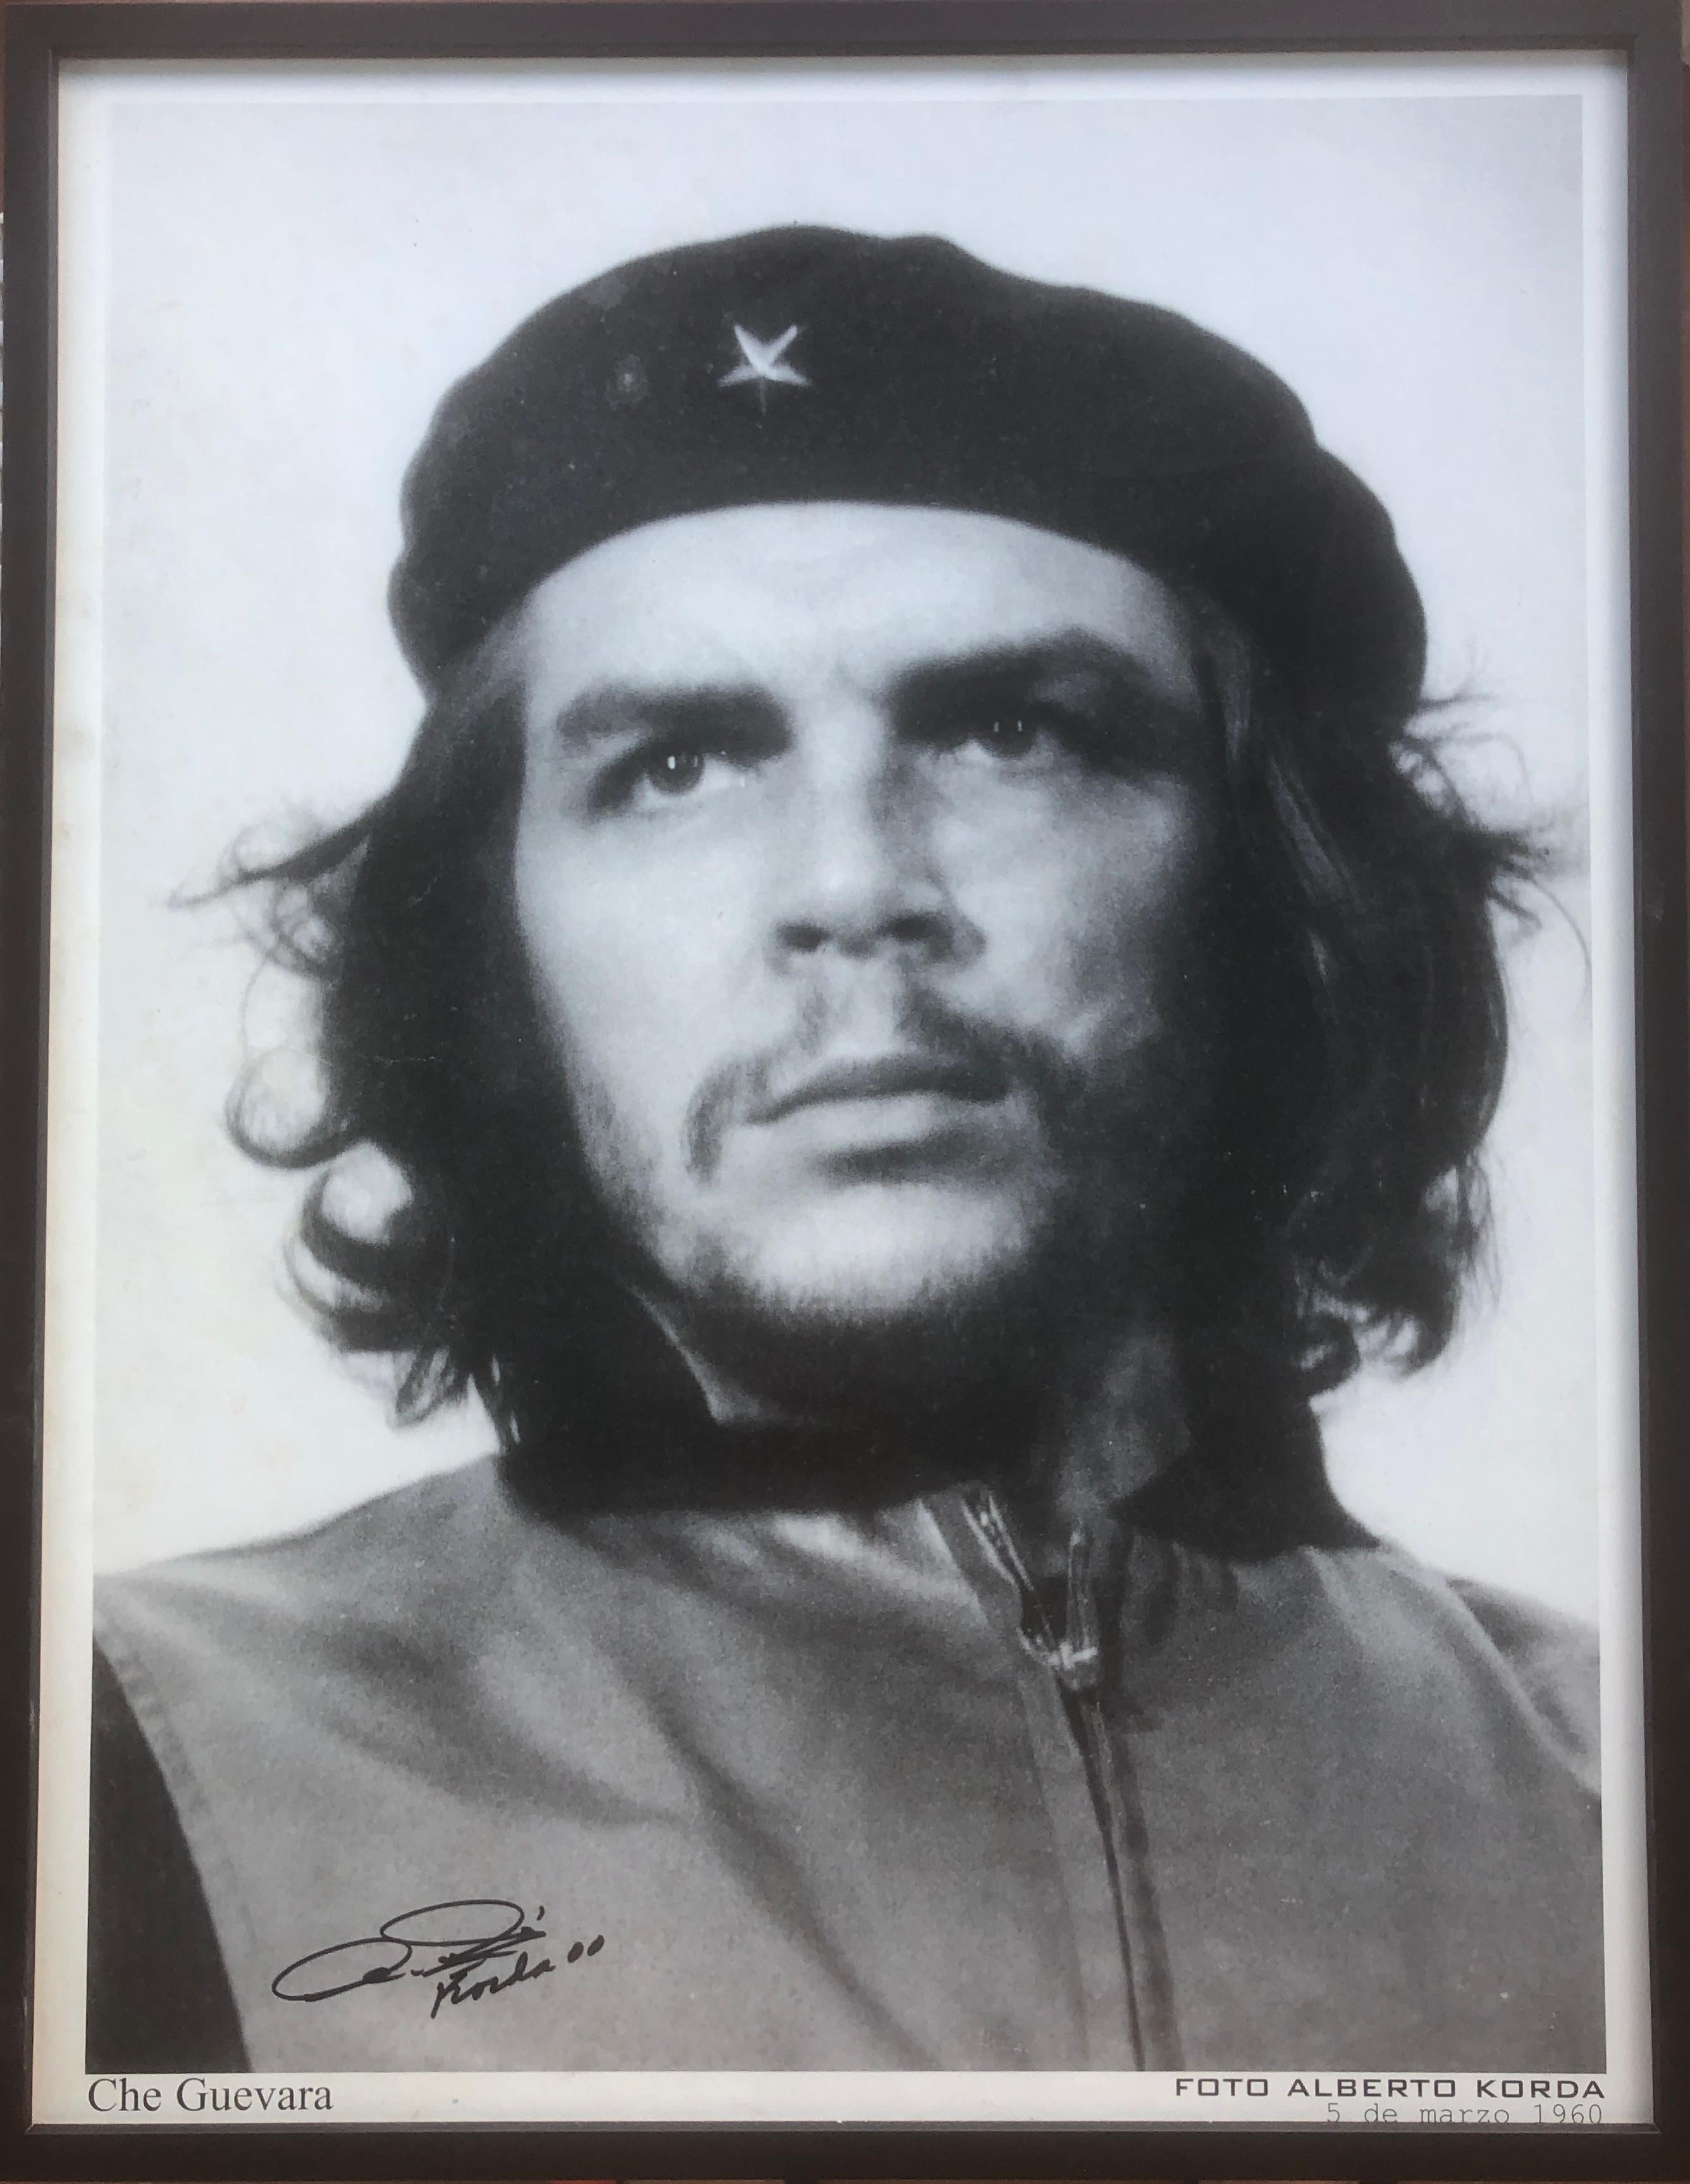 Guerillero Heroico Che Guevara hand signed photograph certified - Photograph by Alberto Korda